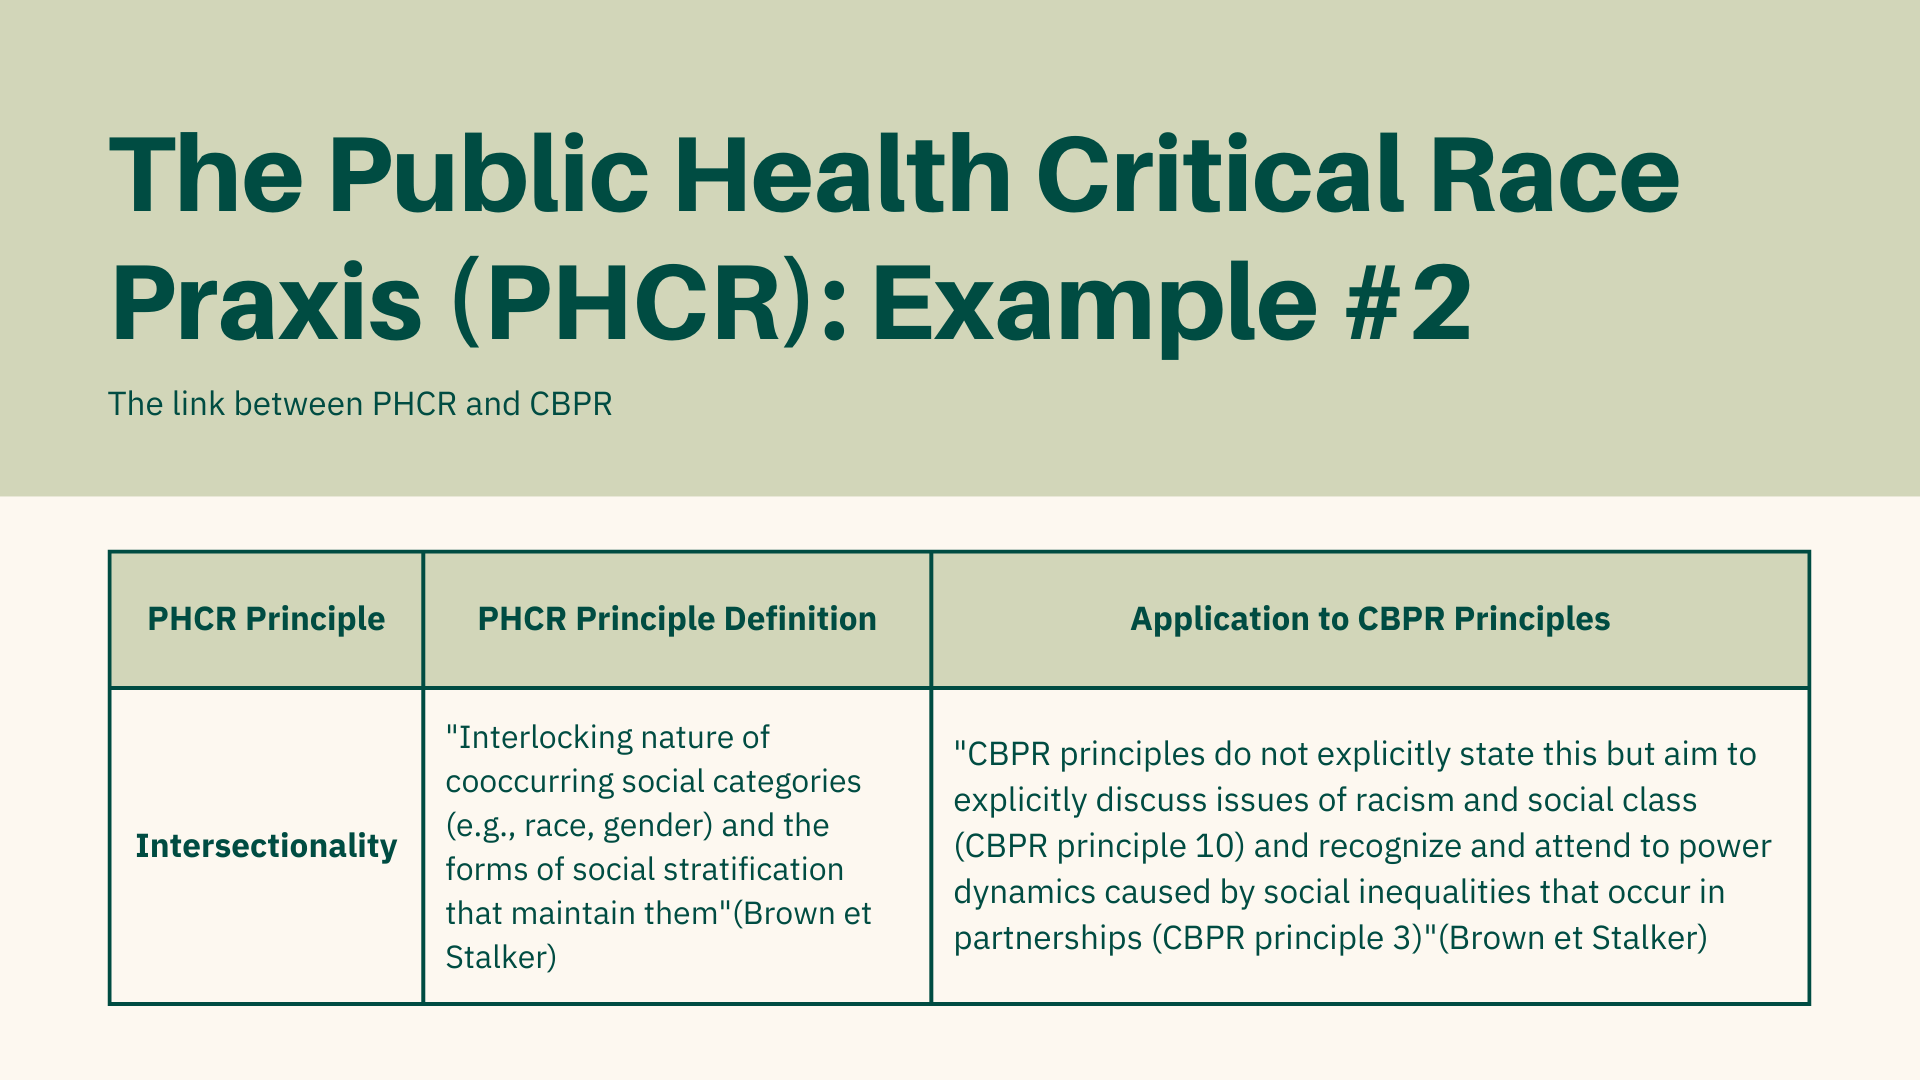 An example of the public health critical race praxis (PHCR)